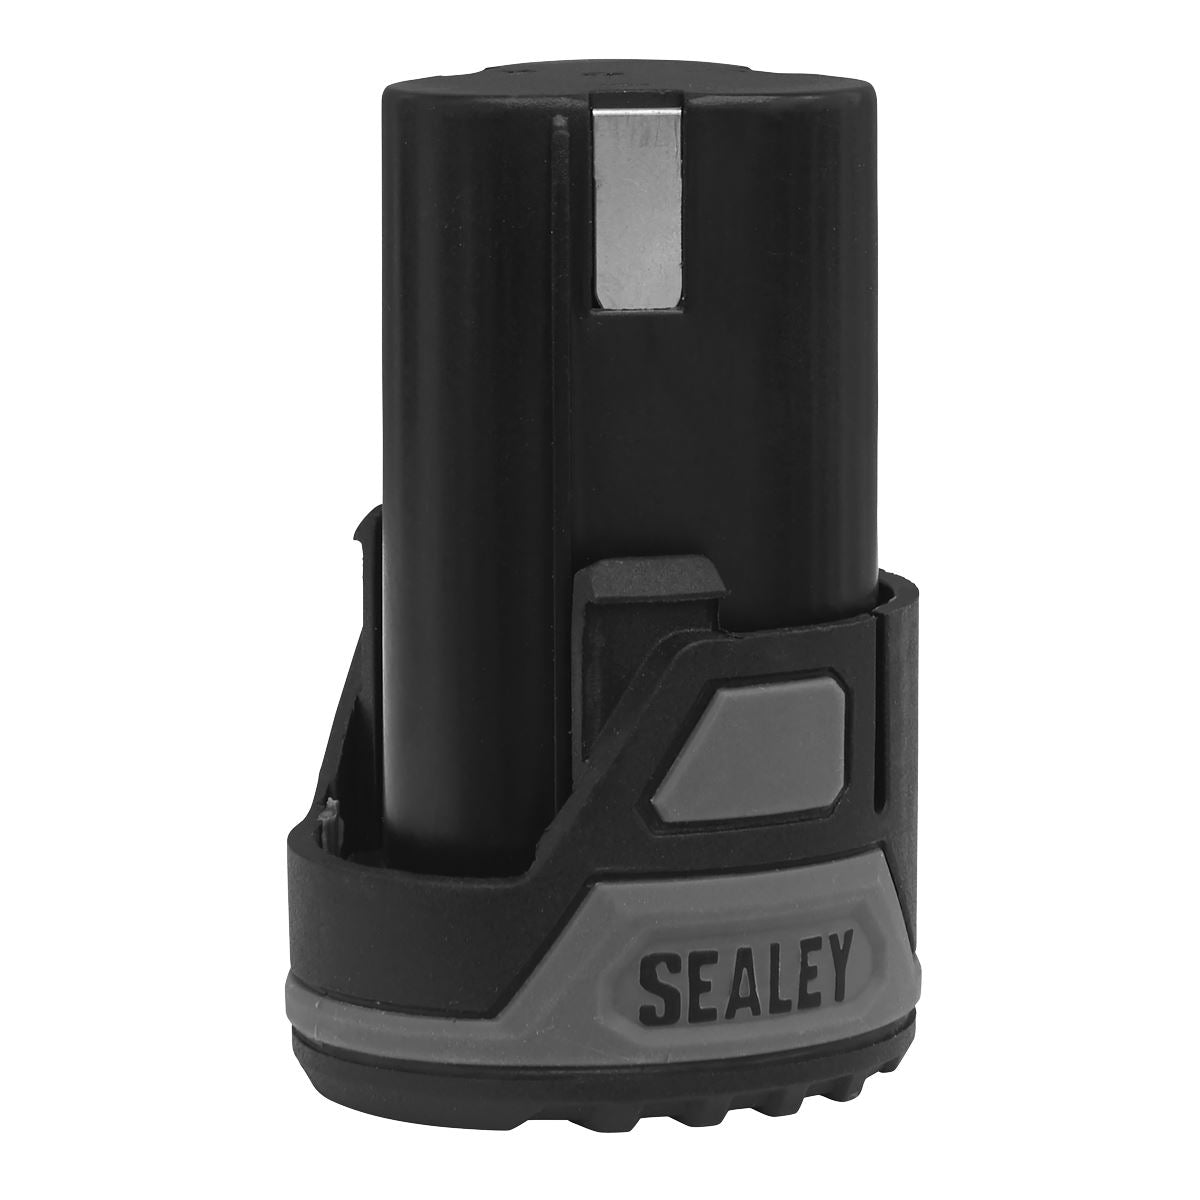 Sealey 2 x 10.8V SV10.8 Series Rotary Hammer Drill & Impact Driver Kit